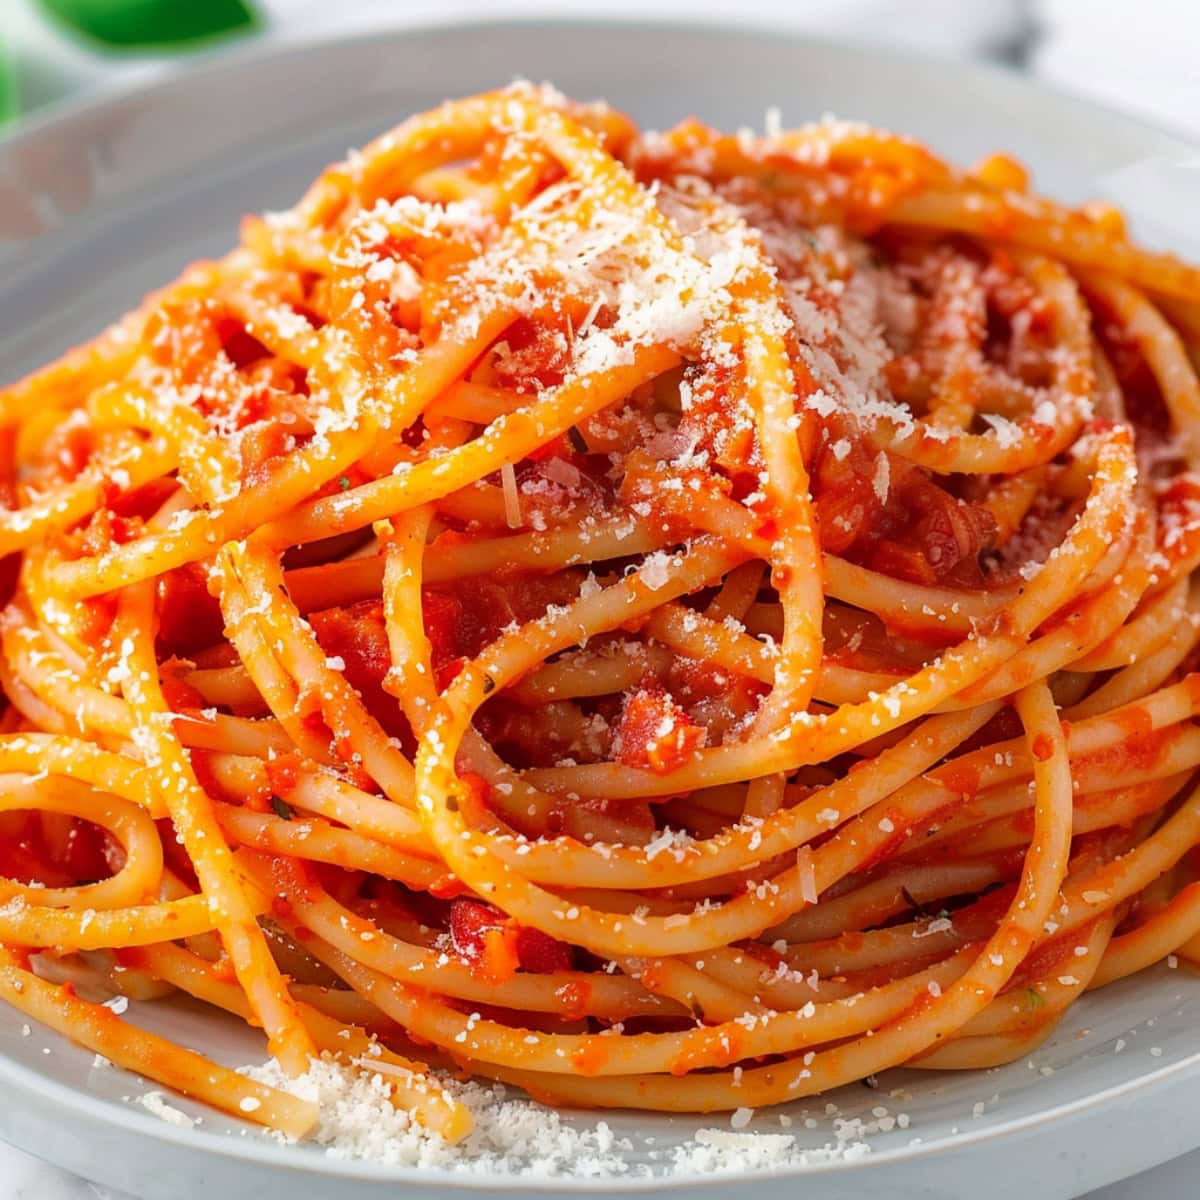 Fresh pasta pomodoro, garnished with basil and parmesan cheese.